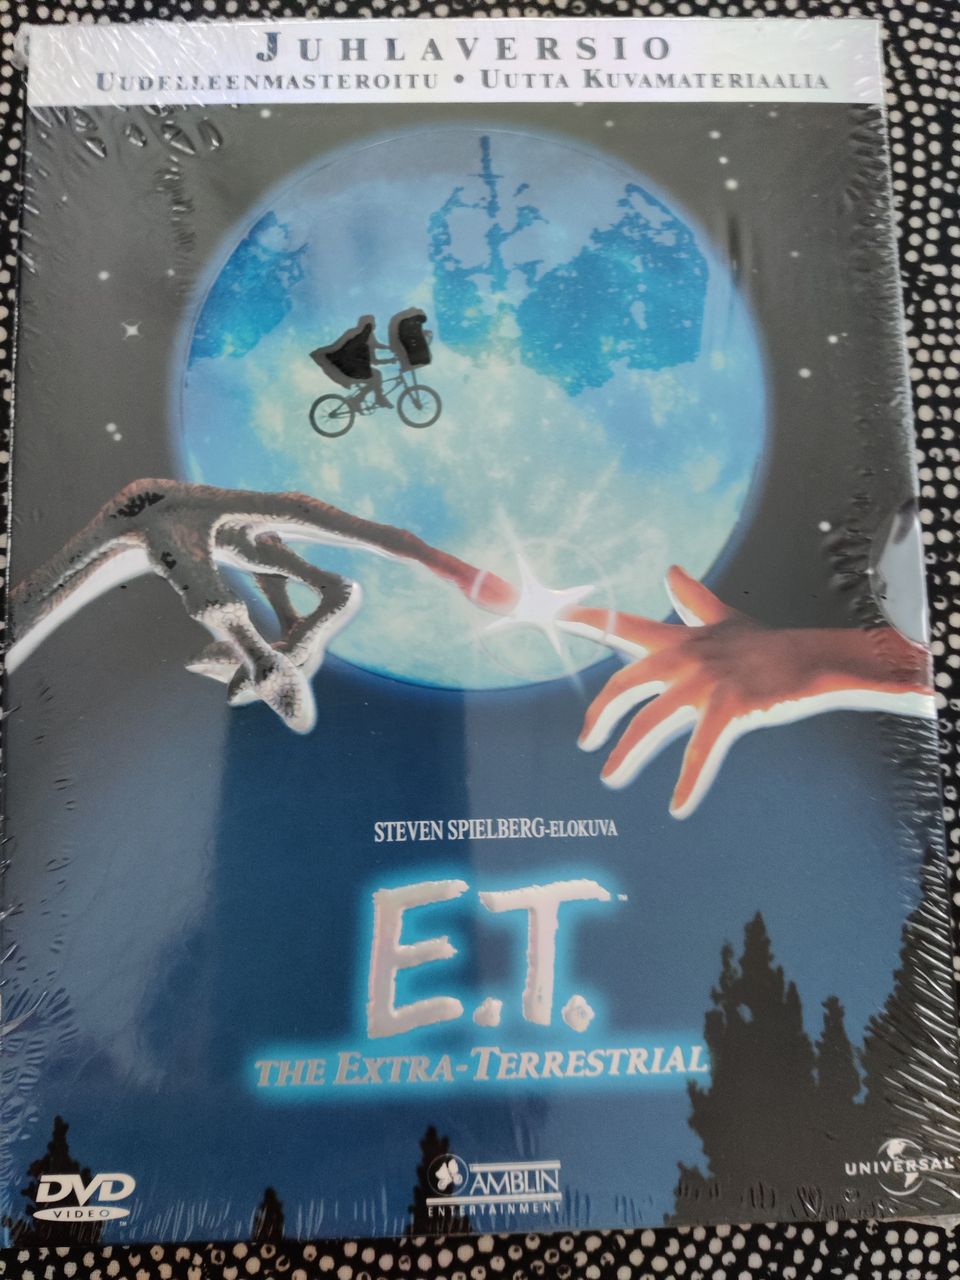 E.T. The Extra-Terrestrial / Spielberg, DVD